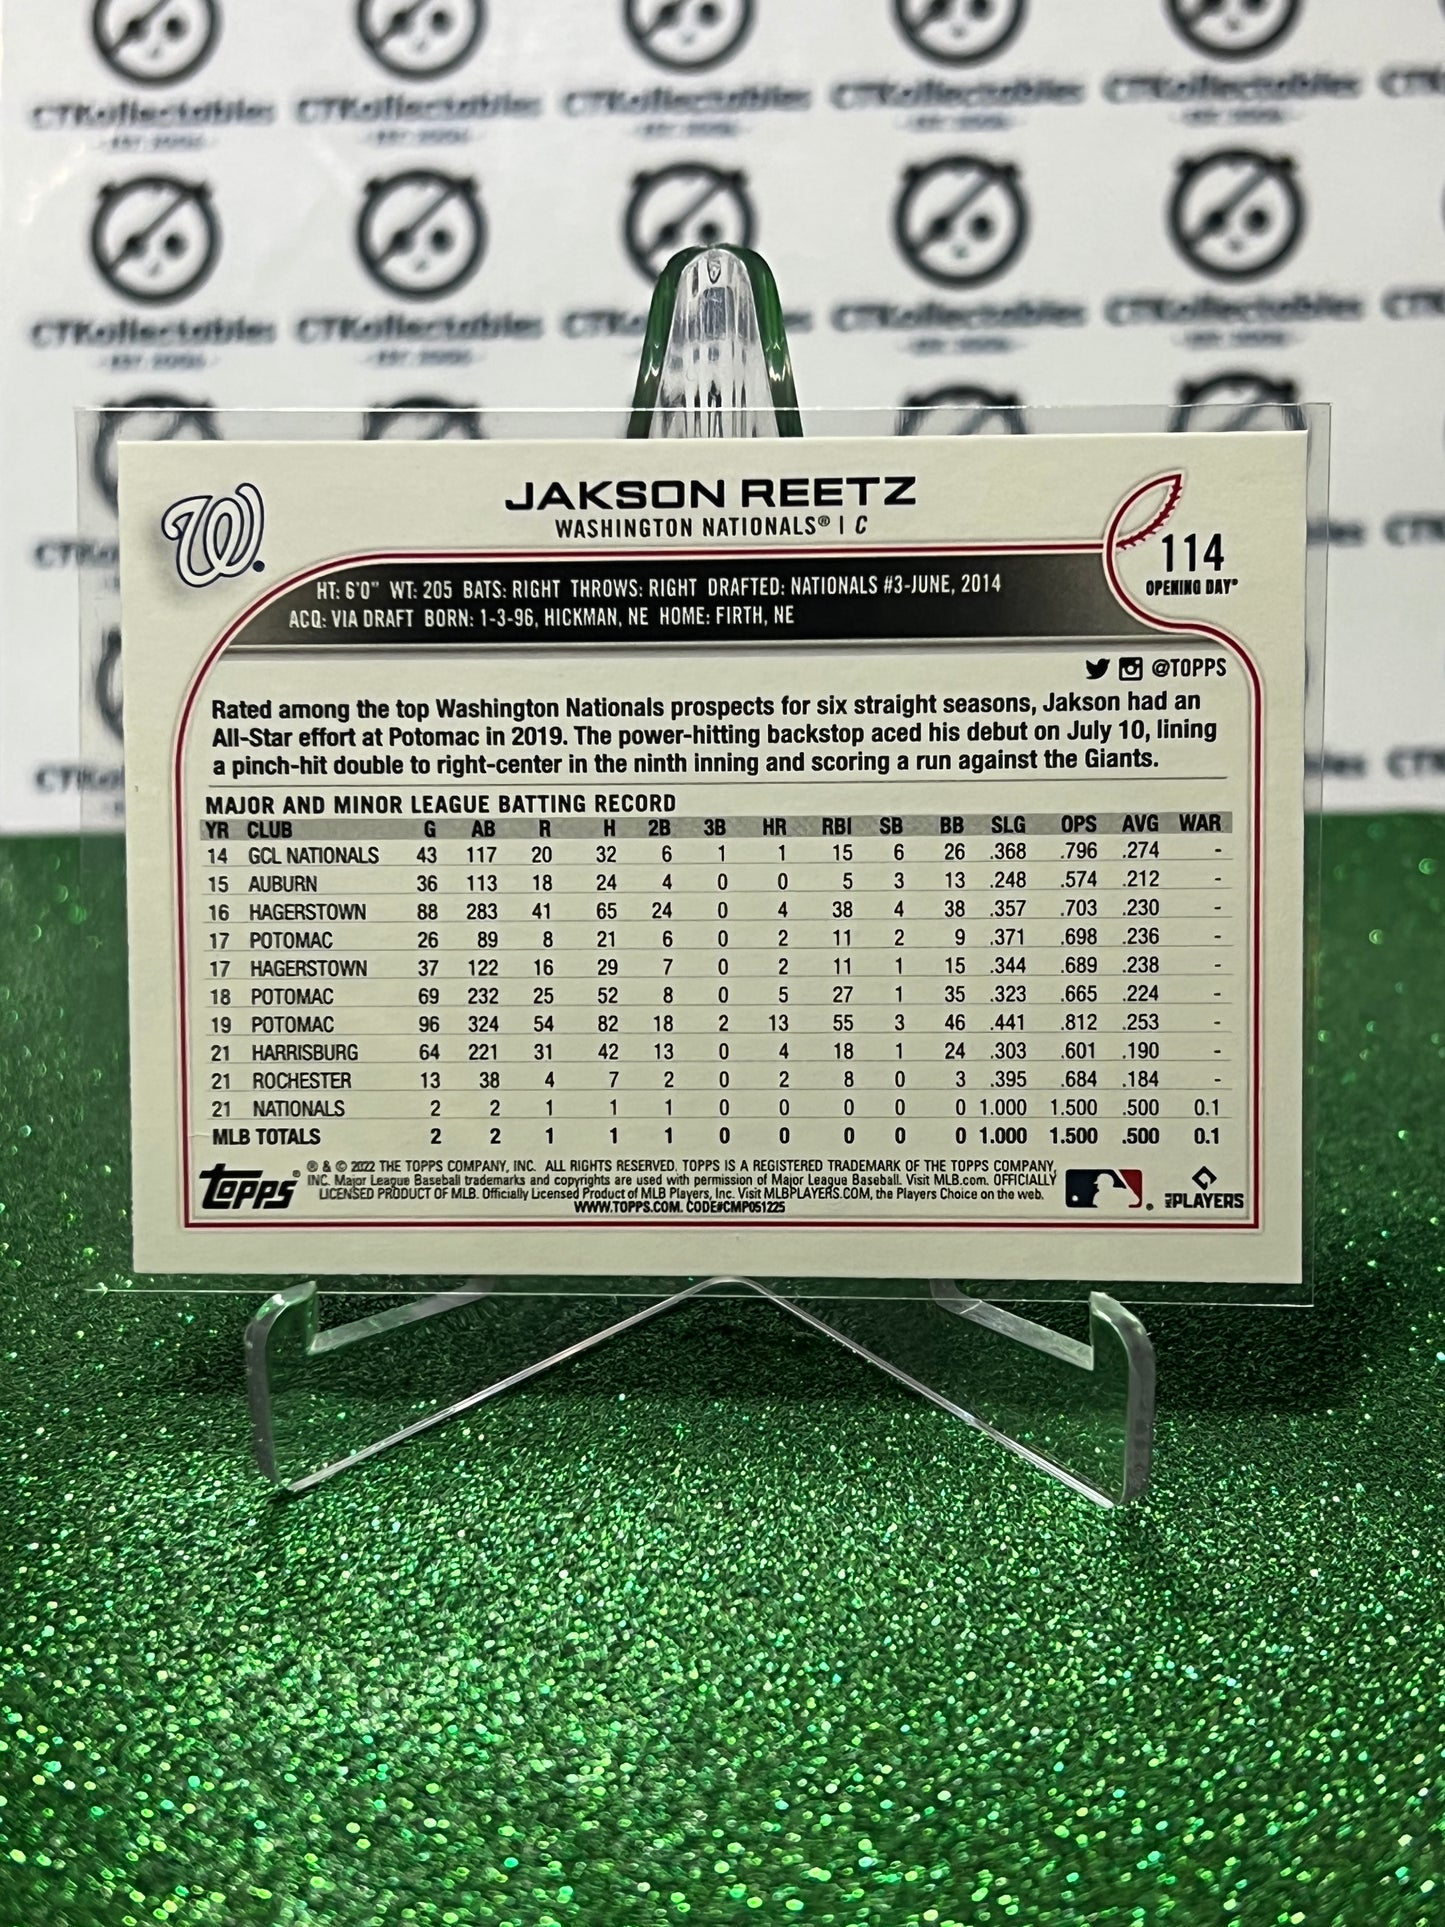 2022 TOPPS OPENING DAY JAKSON REETZ # 114 WASHINGTON NATIONALS BASEBALL CARD